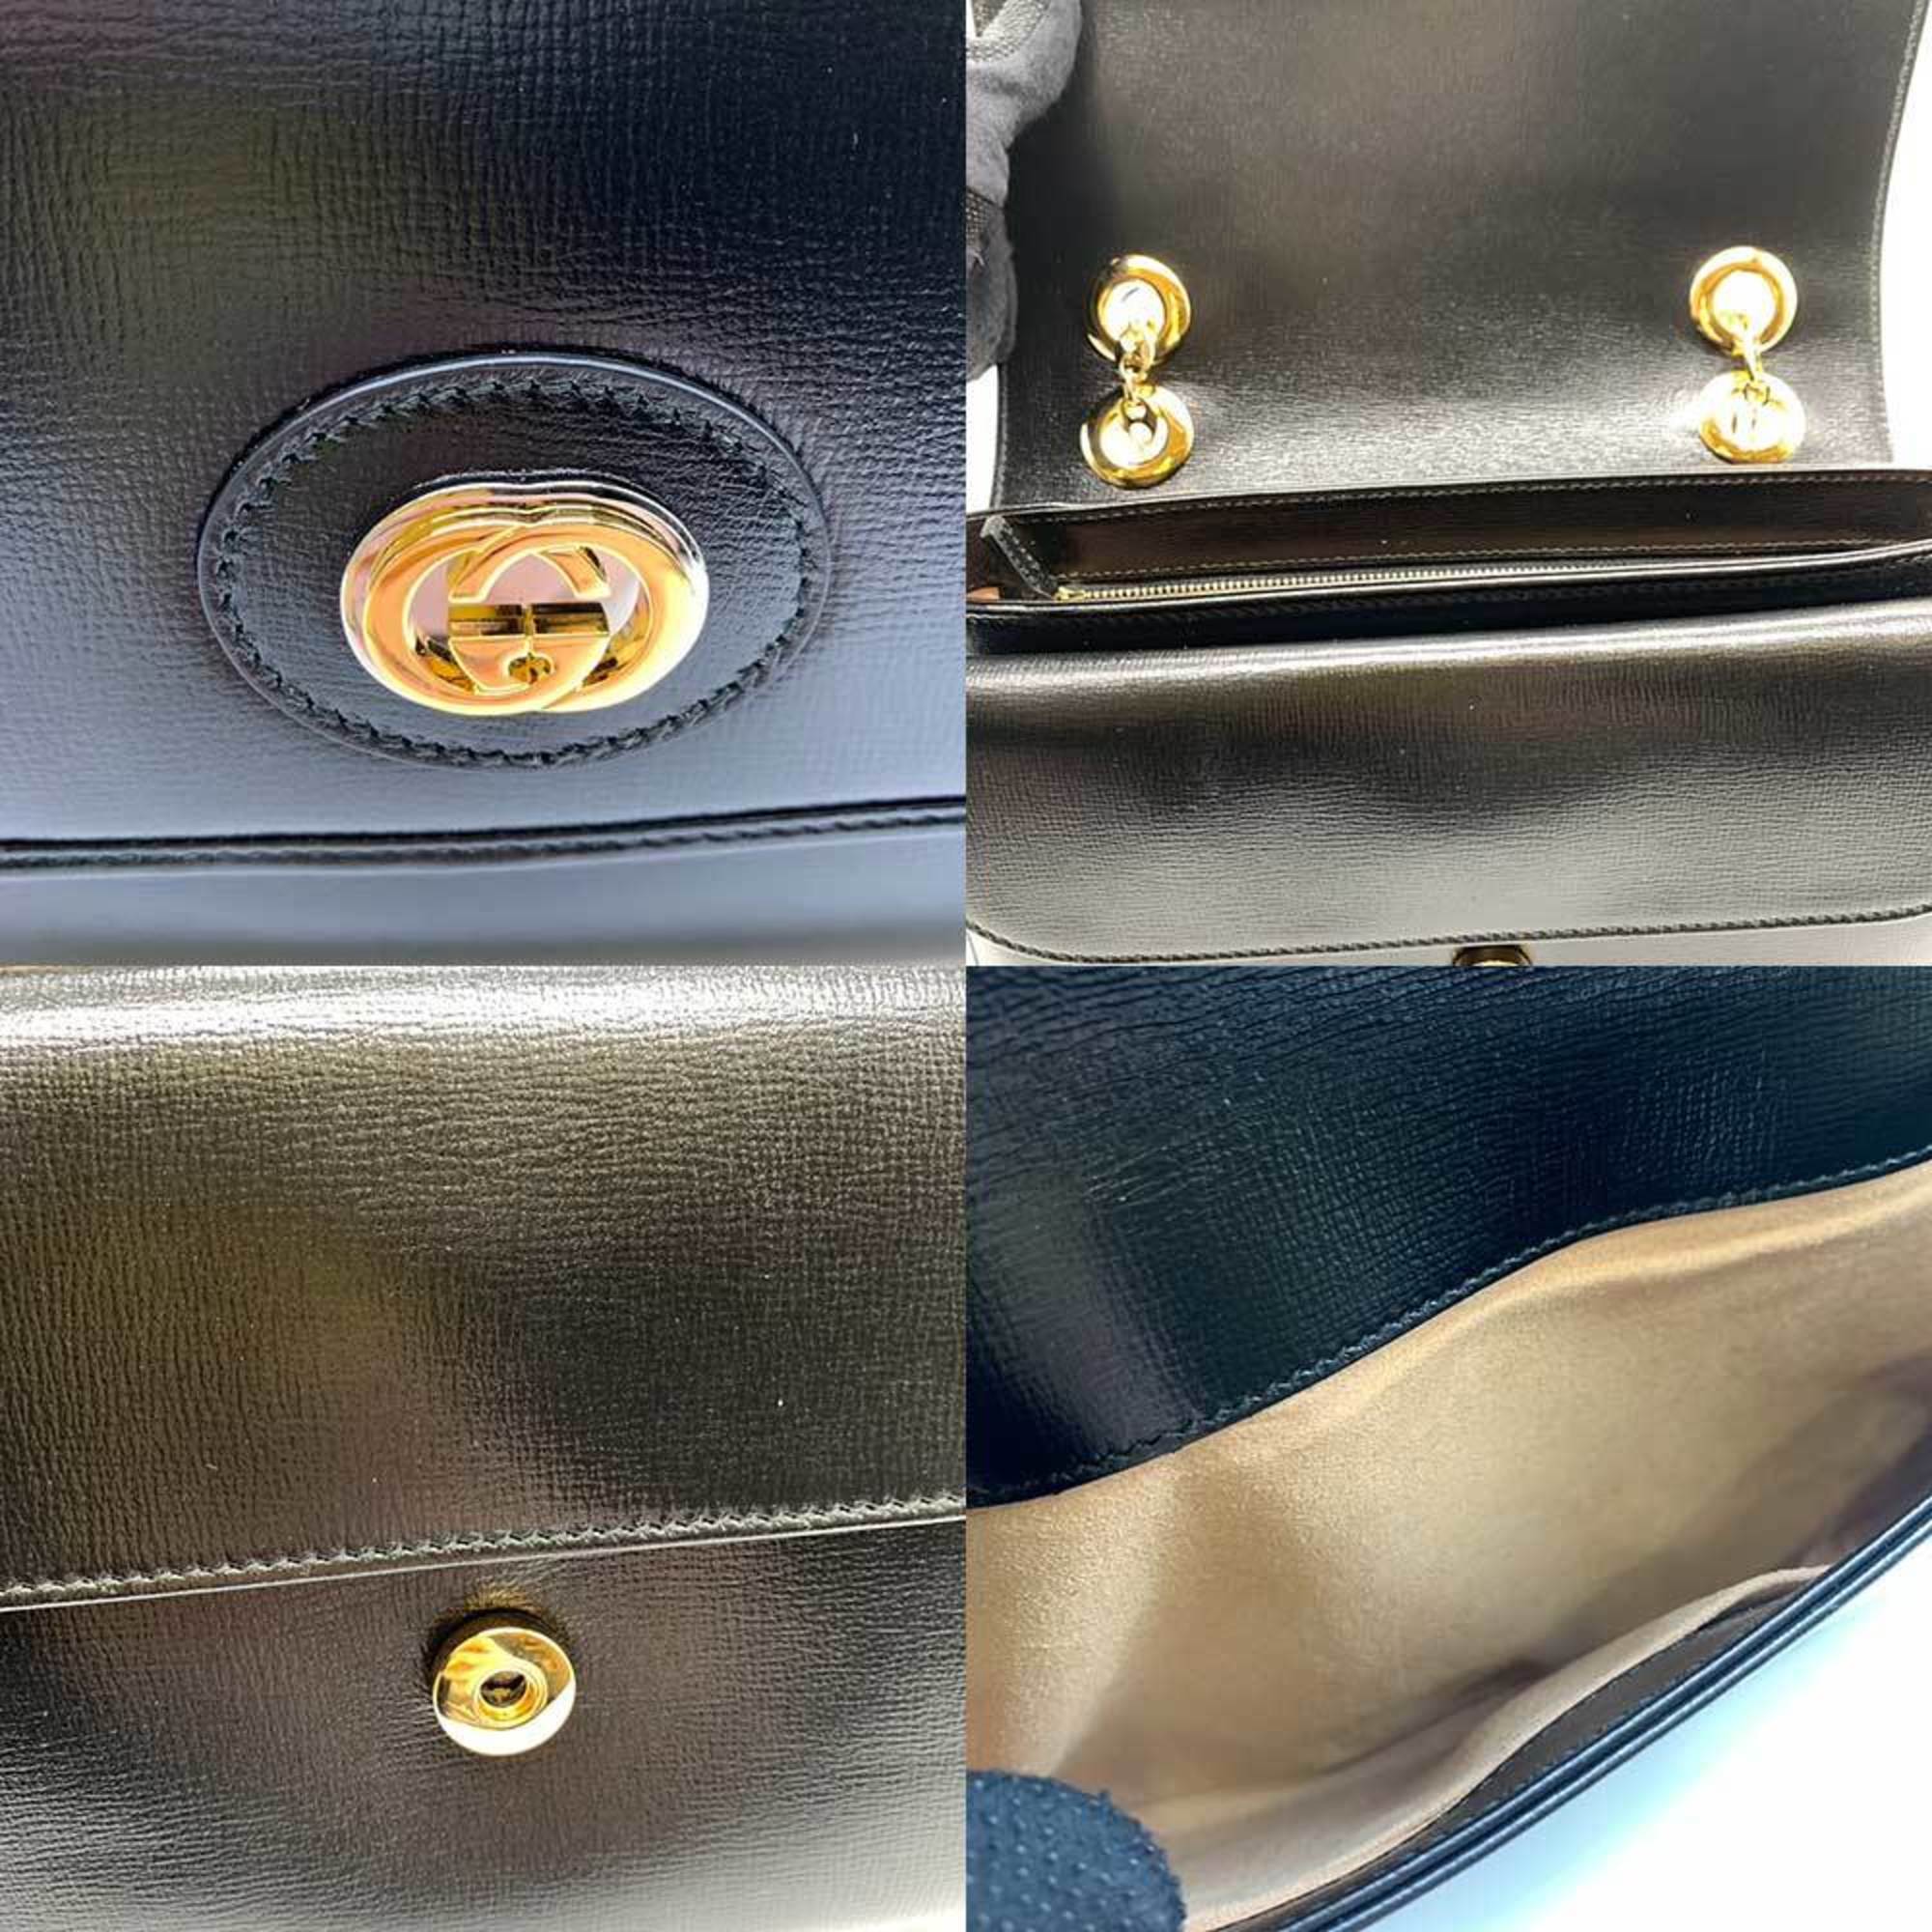 Gucci Bag Marina Chain Shoulder Black Interlocking G W Single 2way Ladies Leather 576421 GUCCI